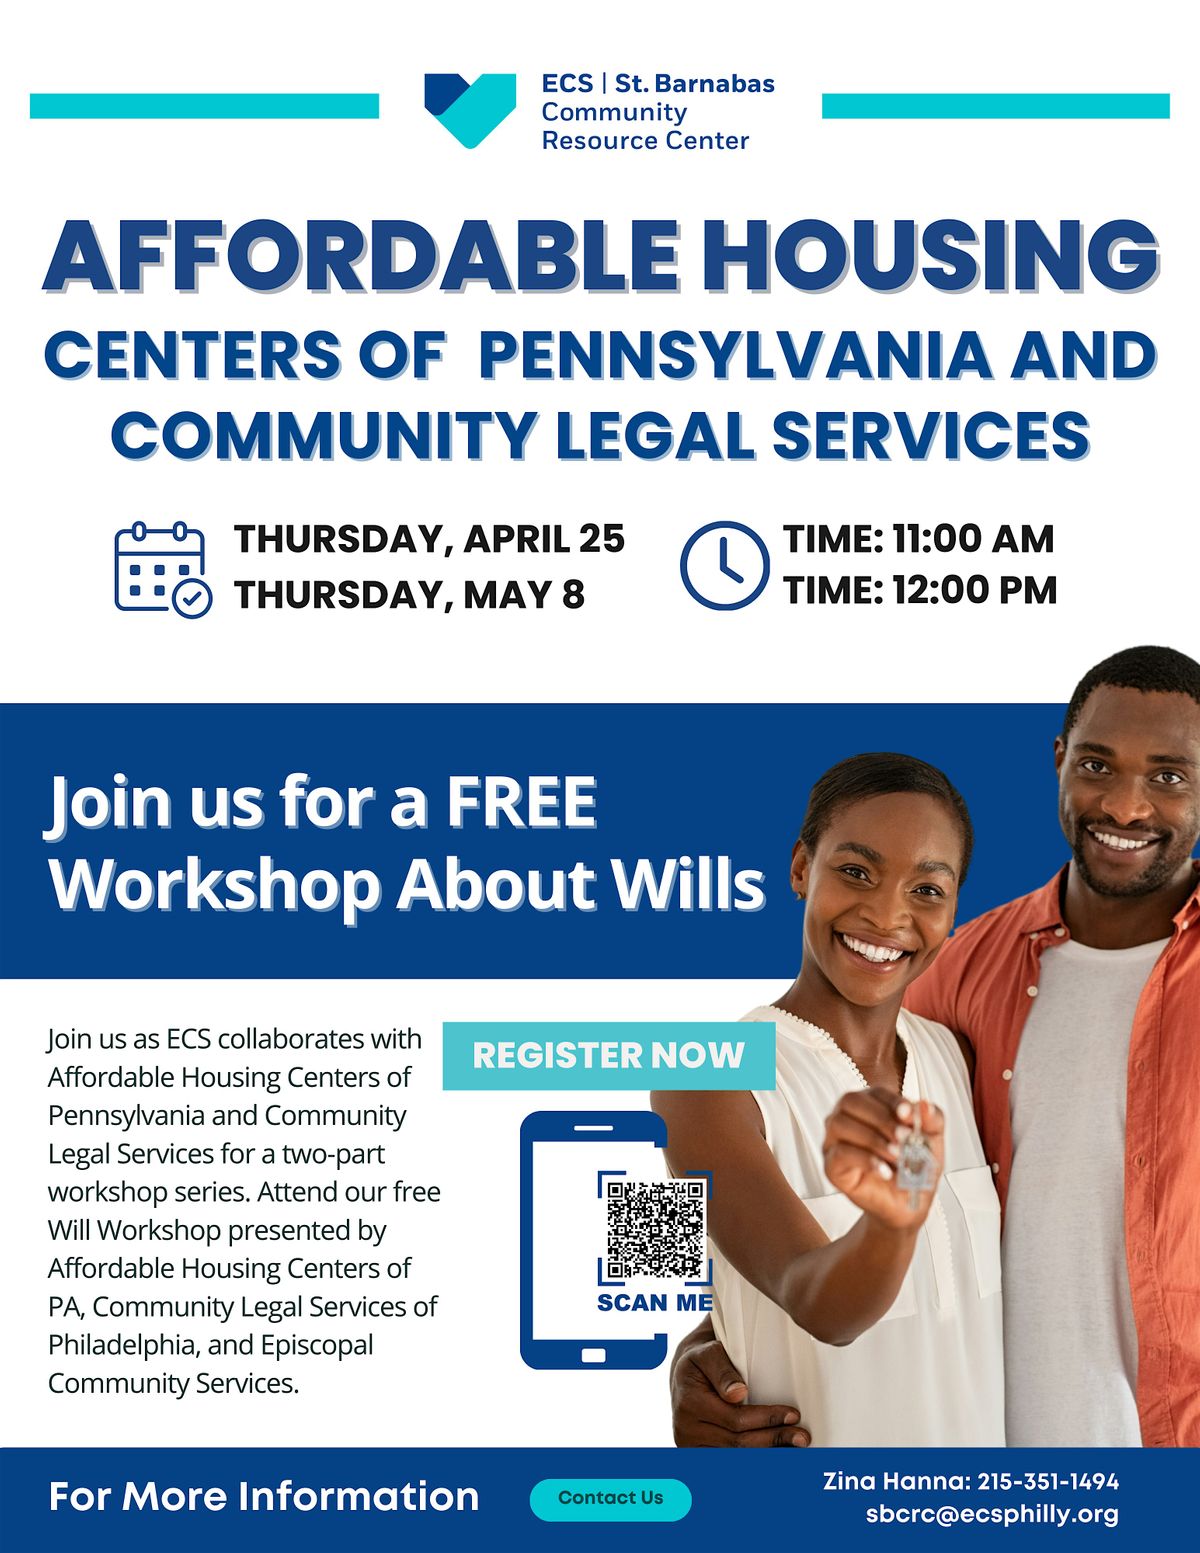 Affordable Housing Workshop On Wills